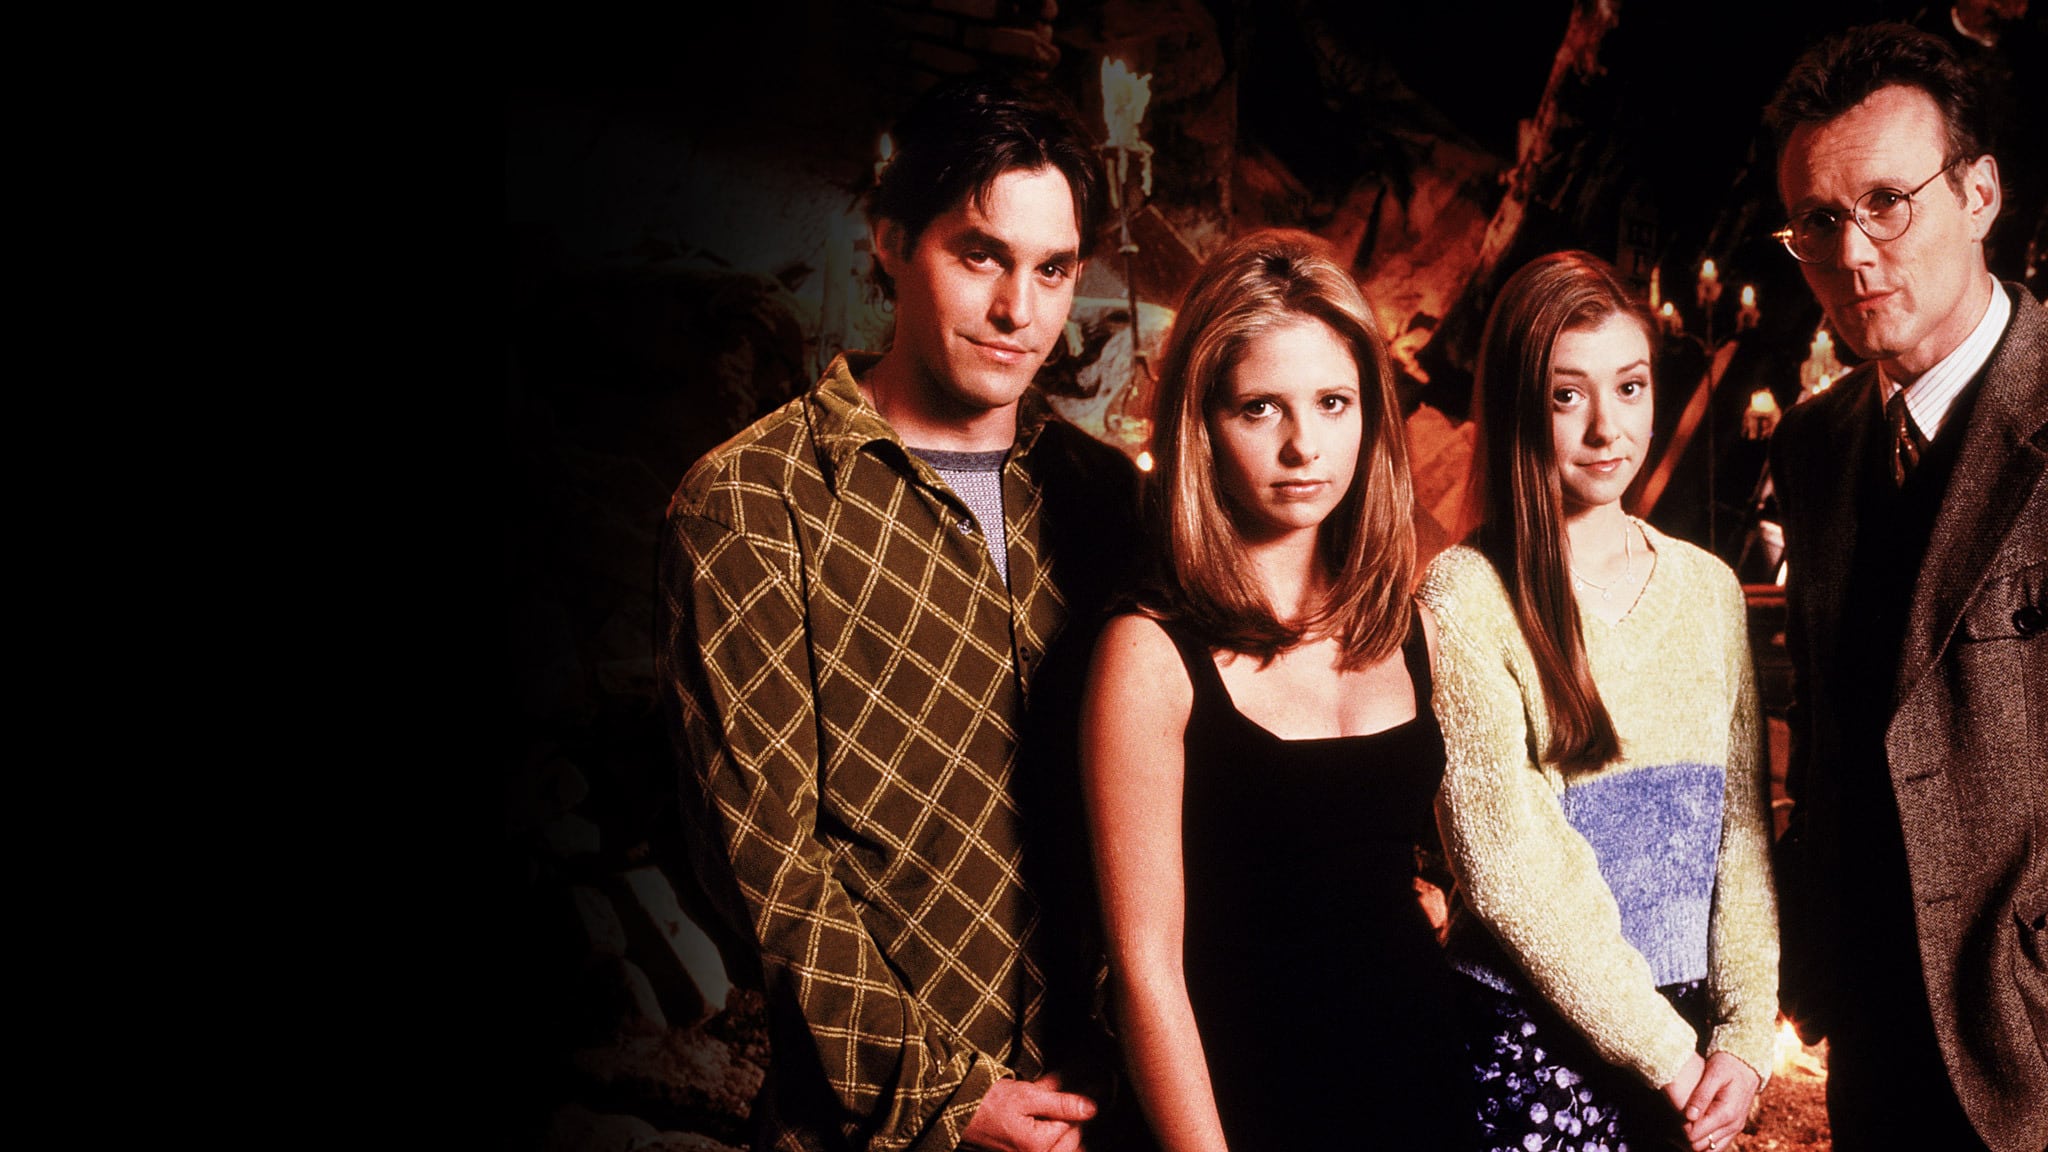 Buffy the vampire slayer wallpaper  Buffy the vampire slayer Halloween  wallpaper backgrounds Buffy